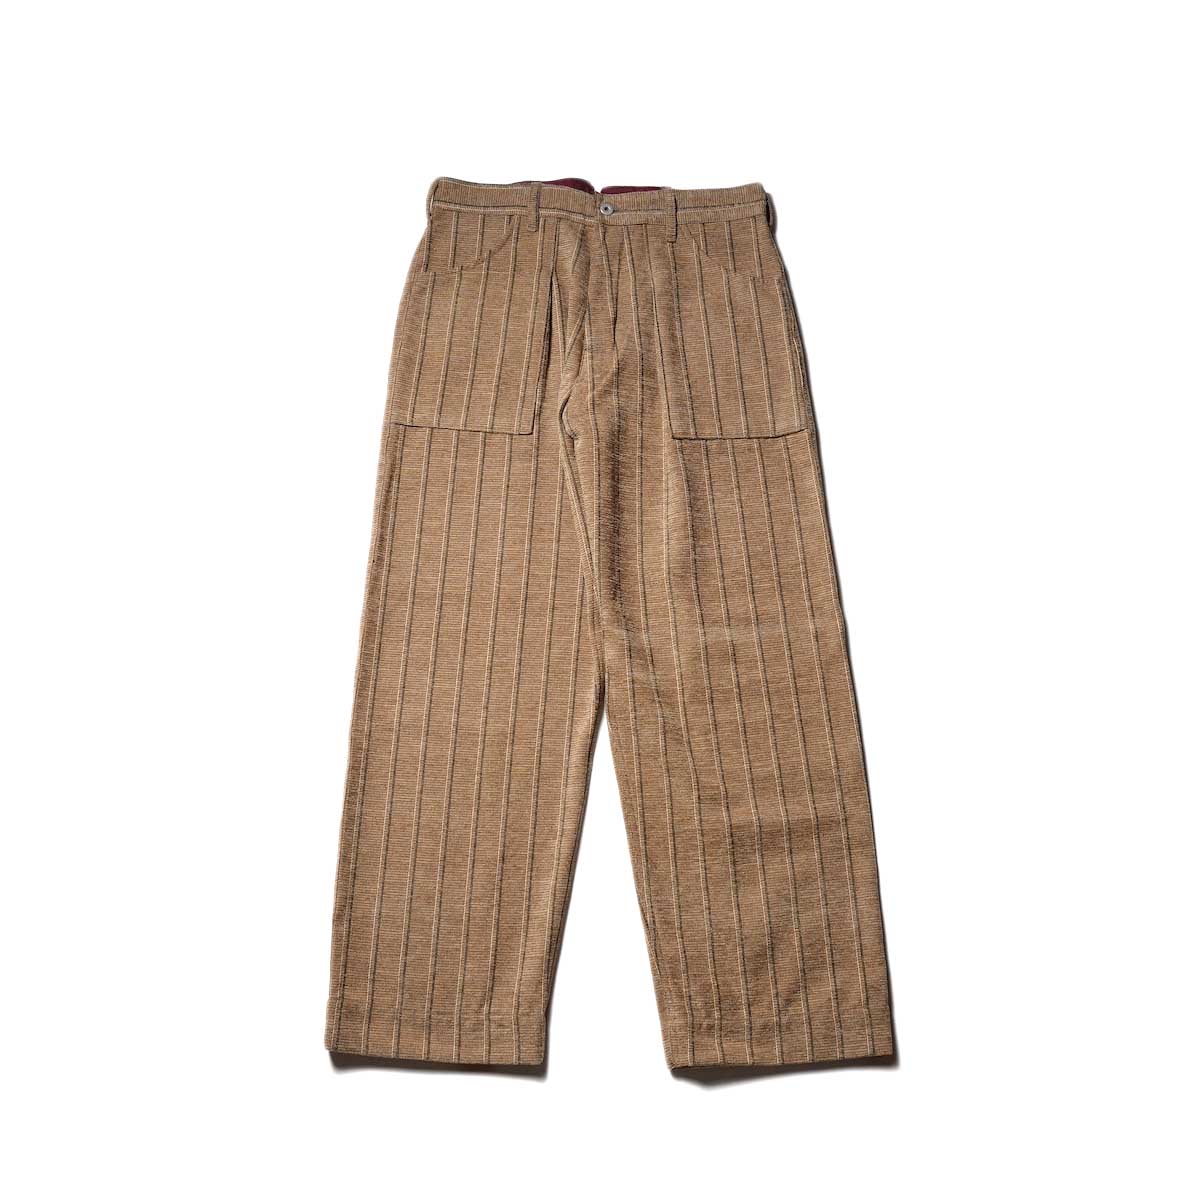 Willow Pants / P-001 Beige Stripe Pants